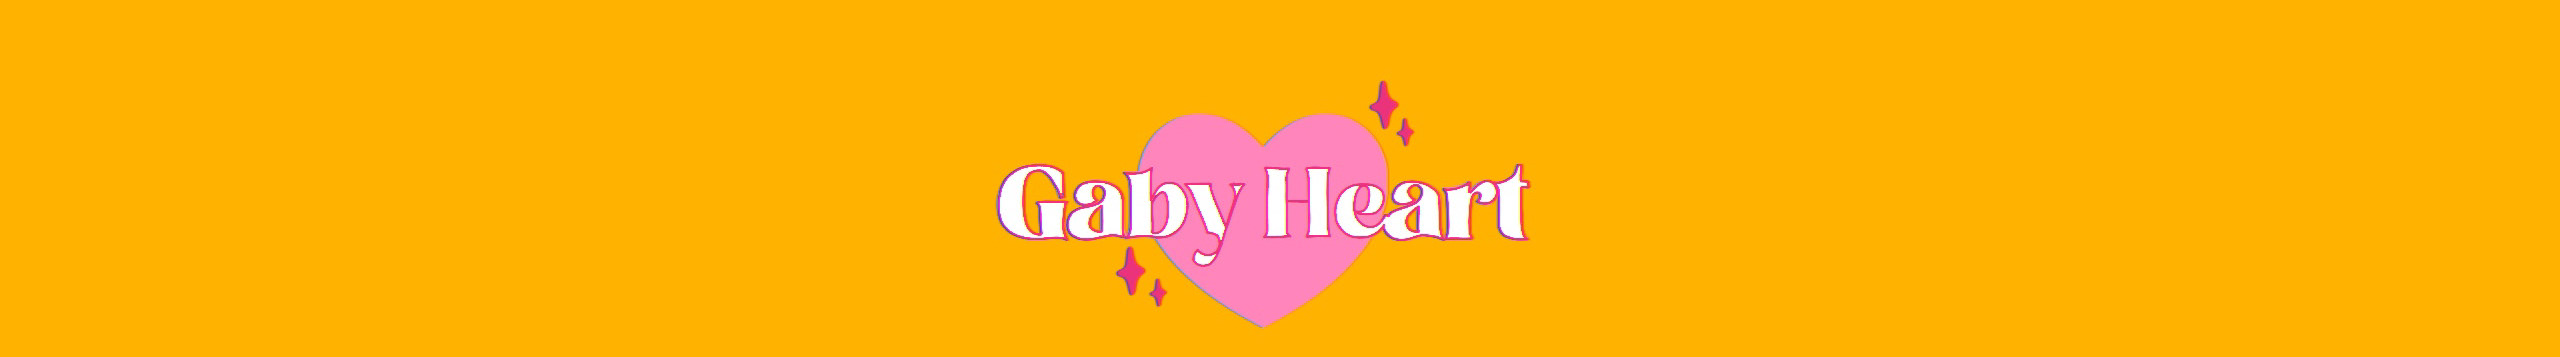 Gaby Heart profil başlığı